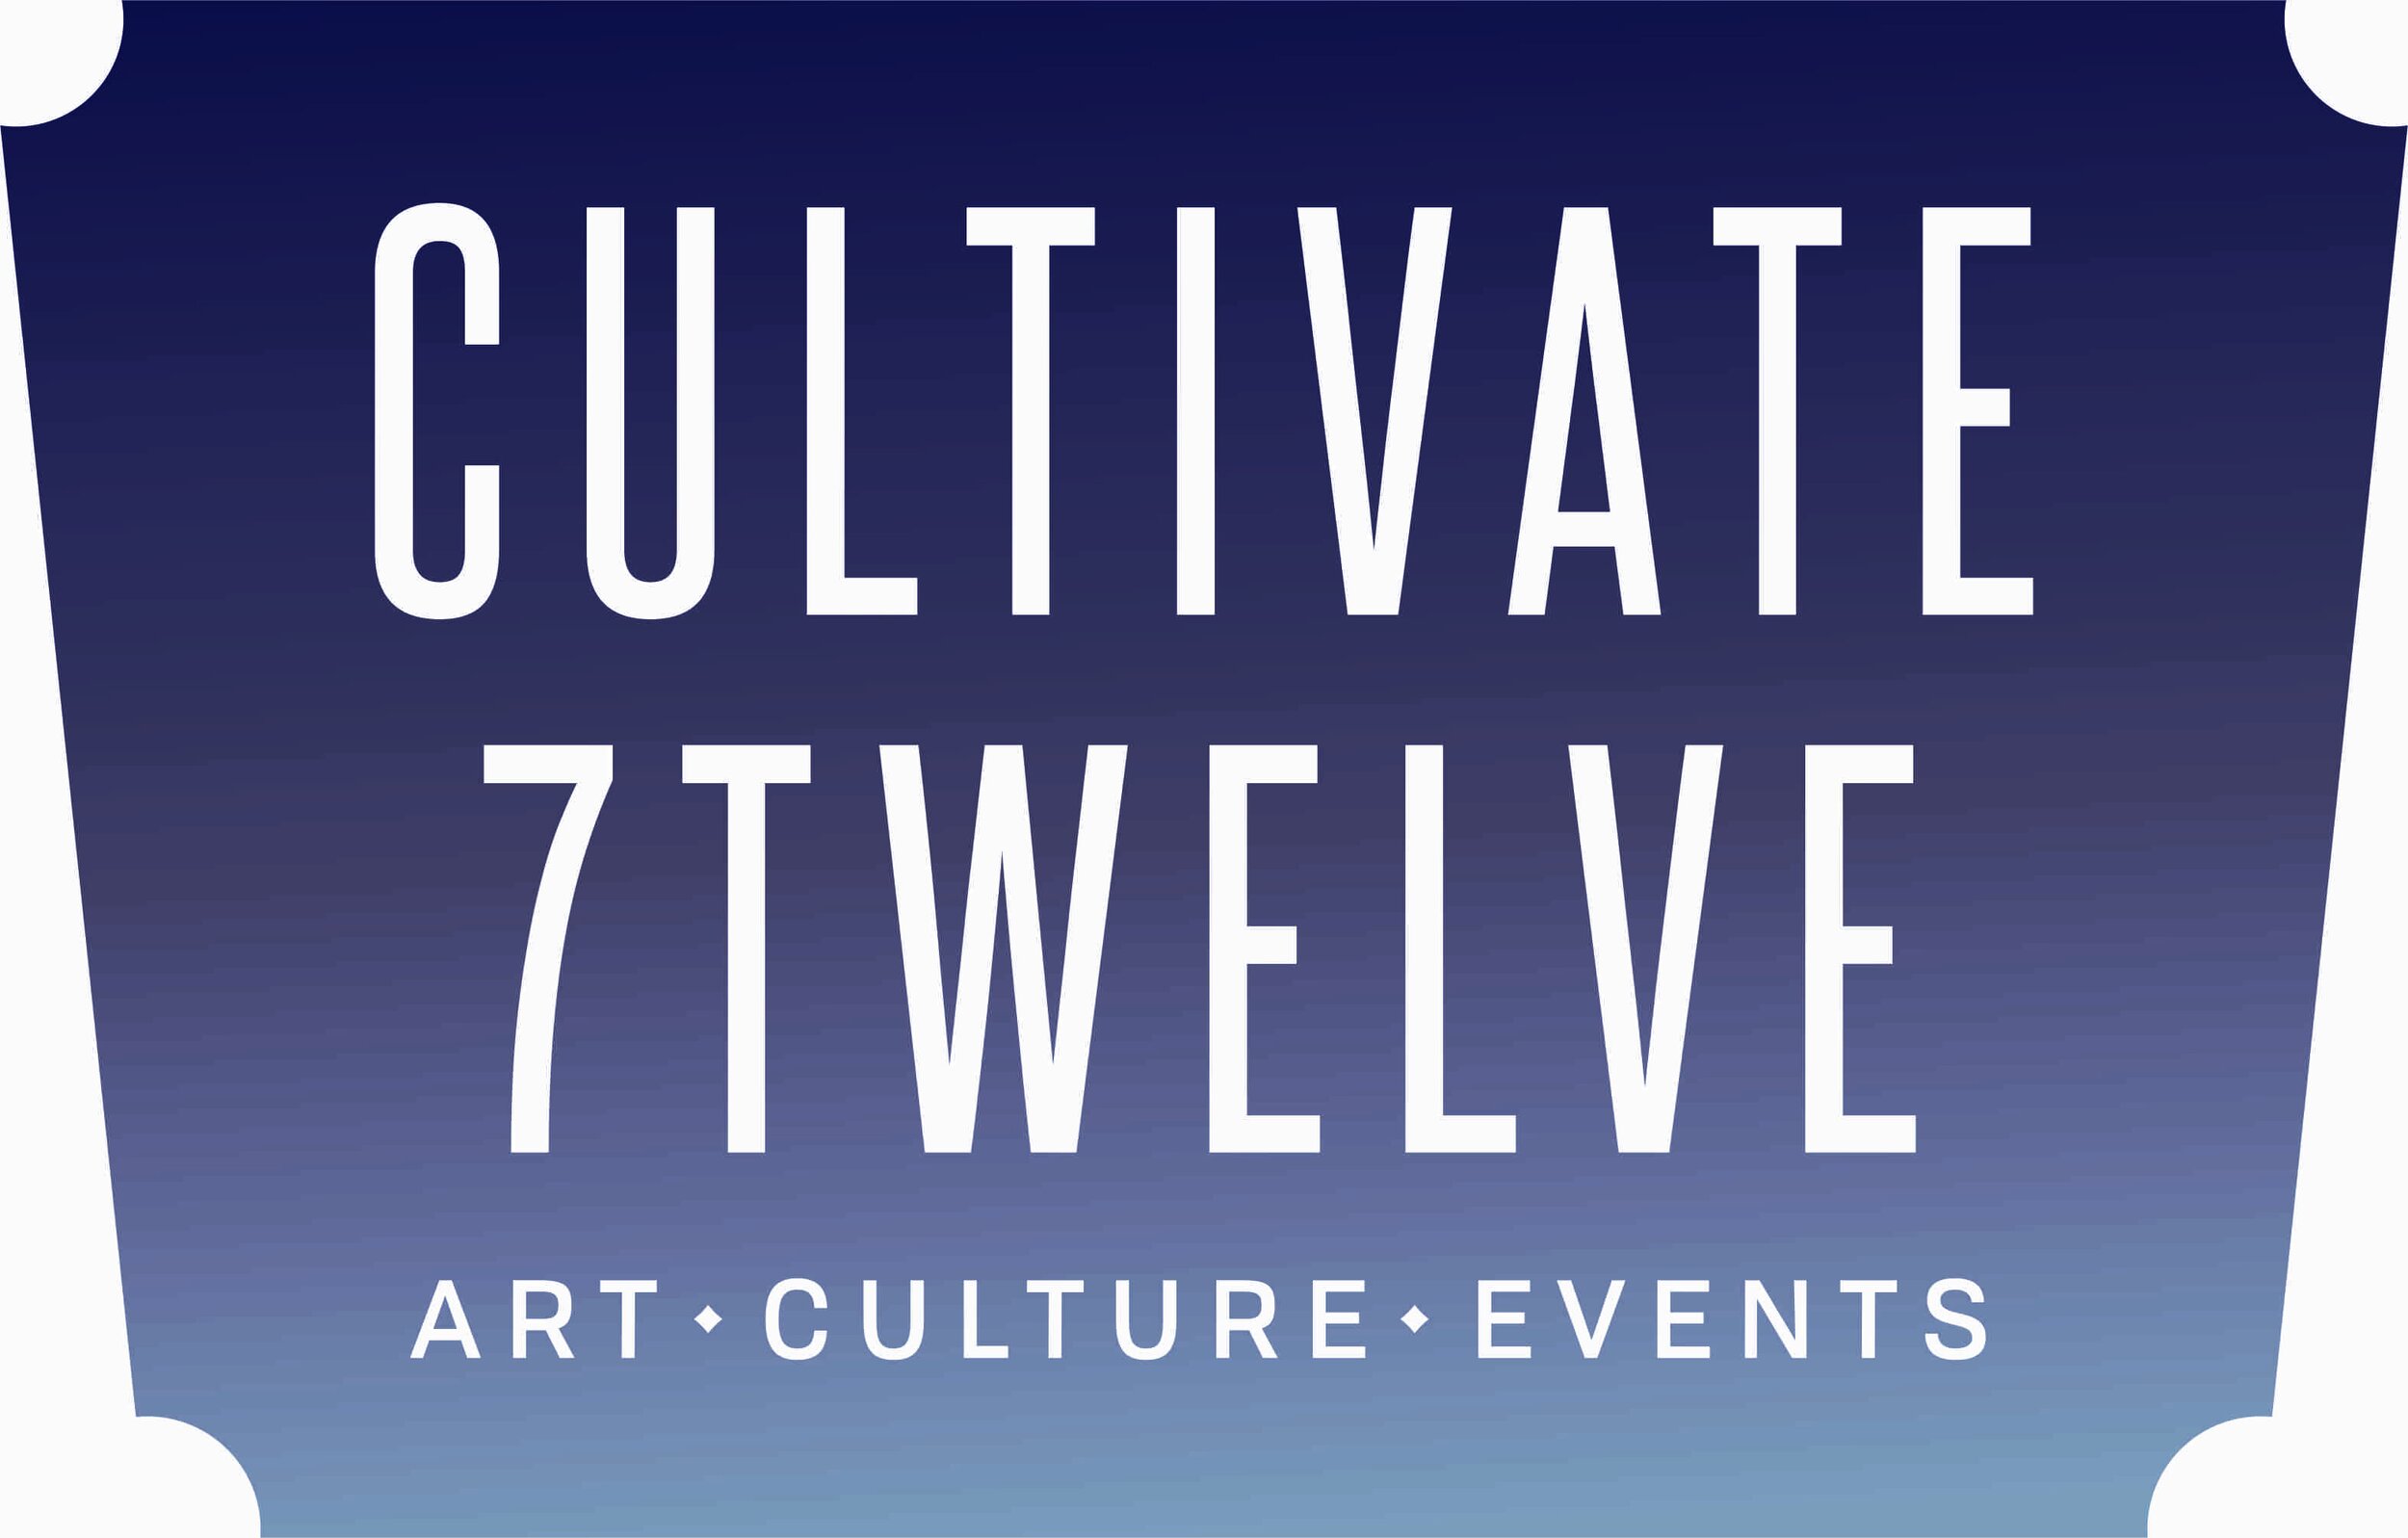 Cultivate 7twelve (Copy)